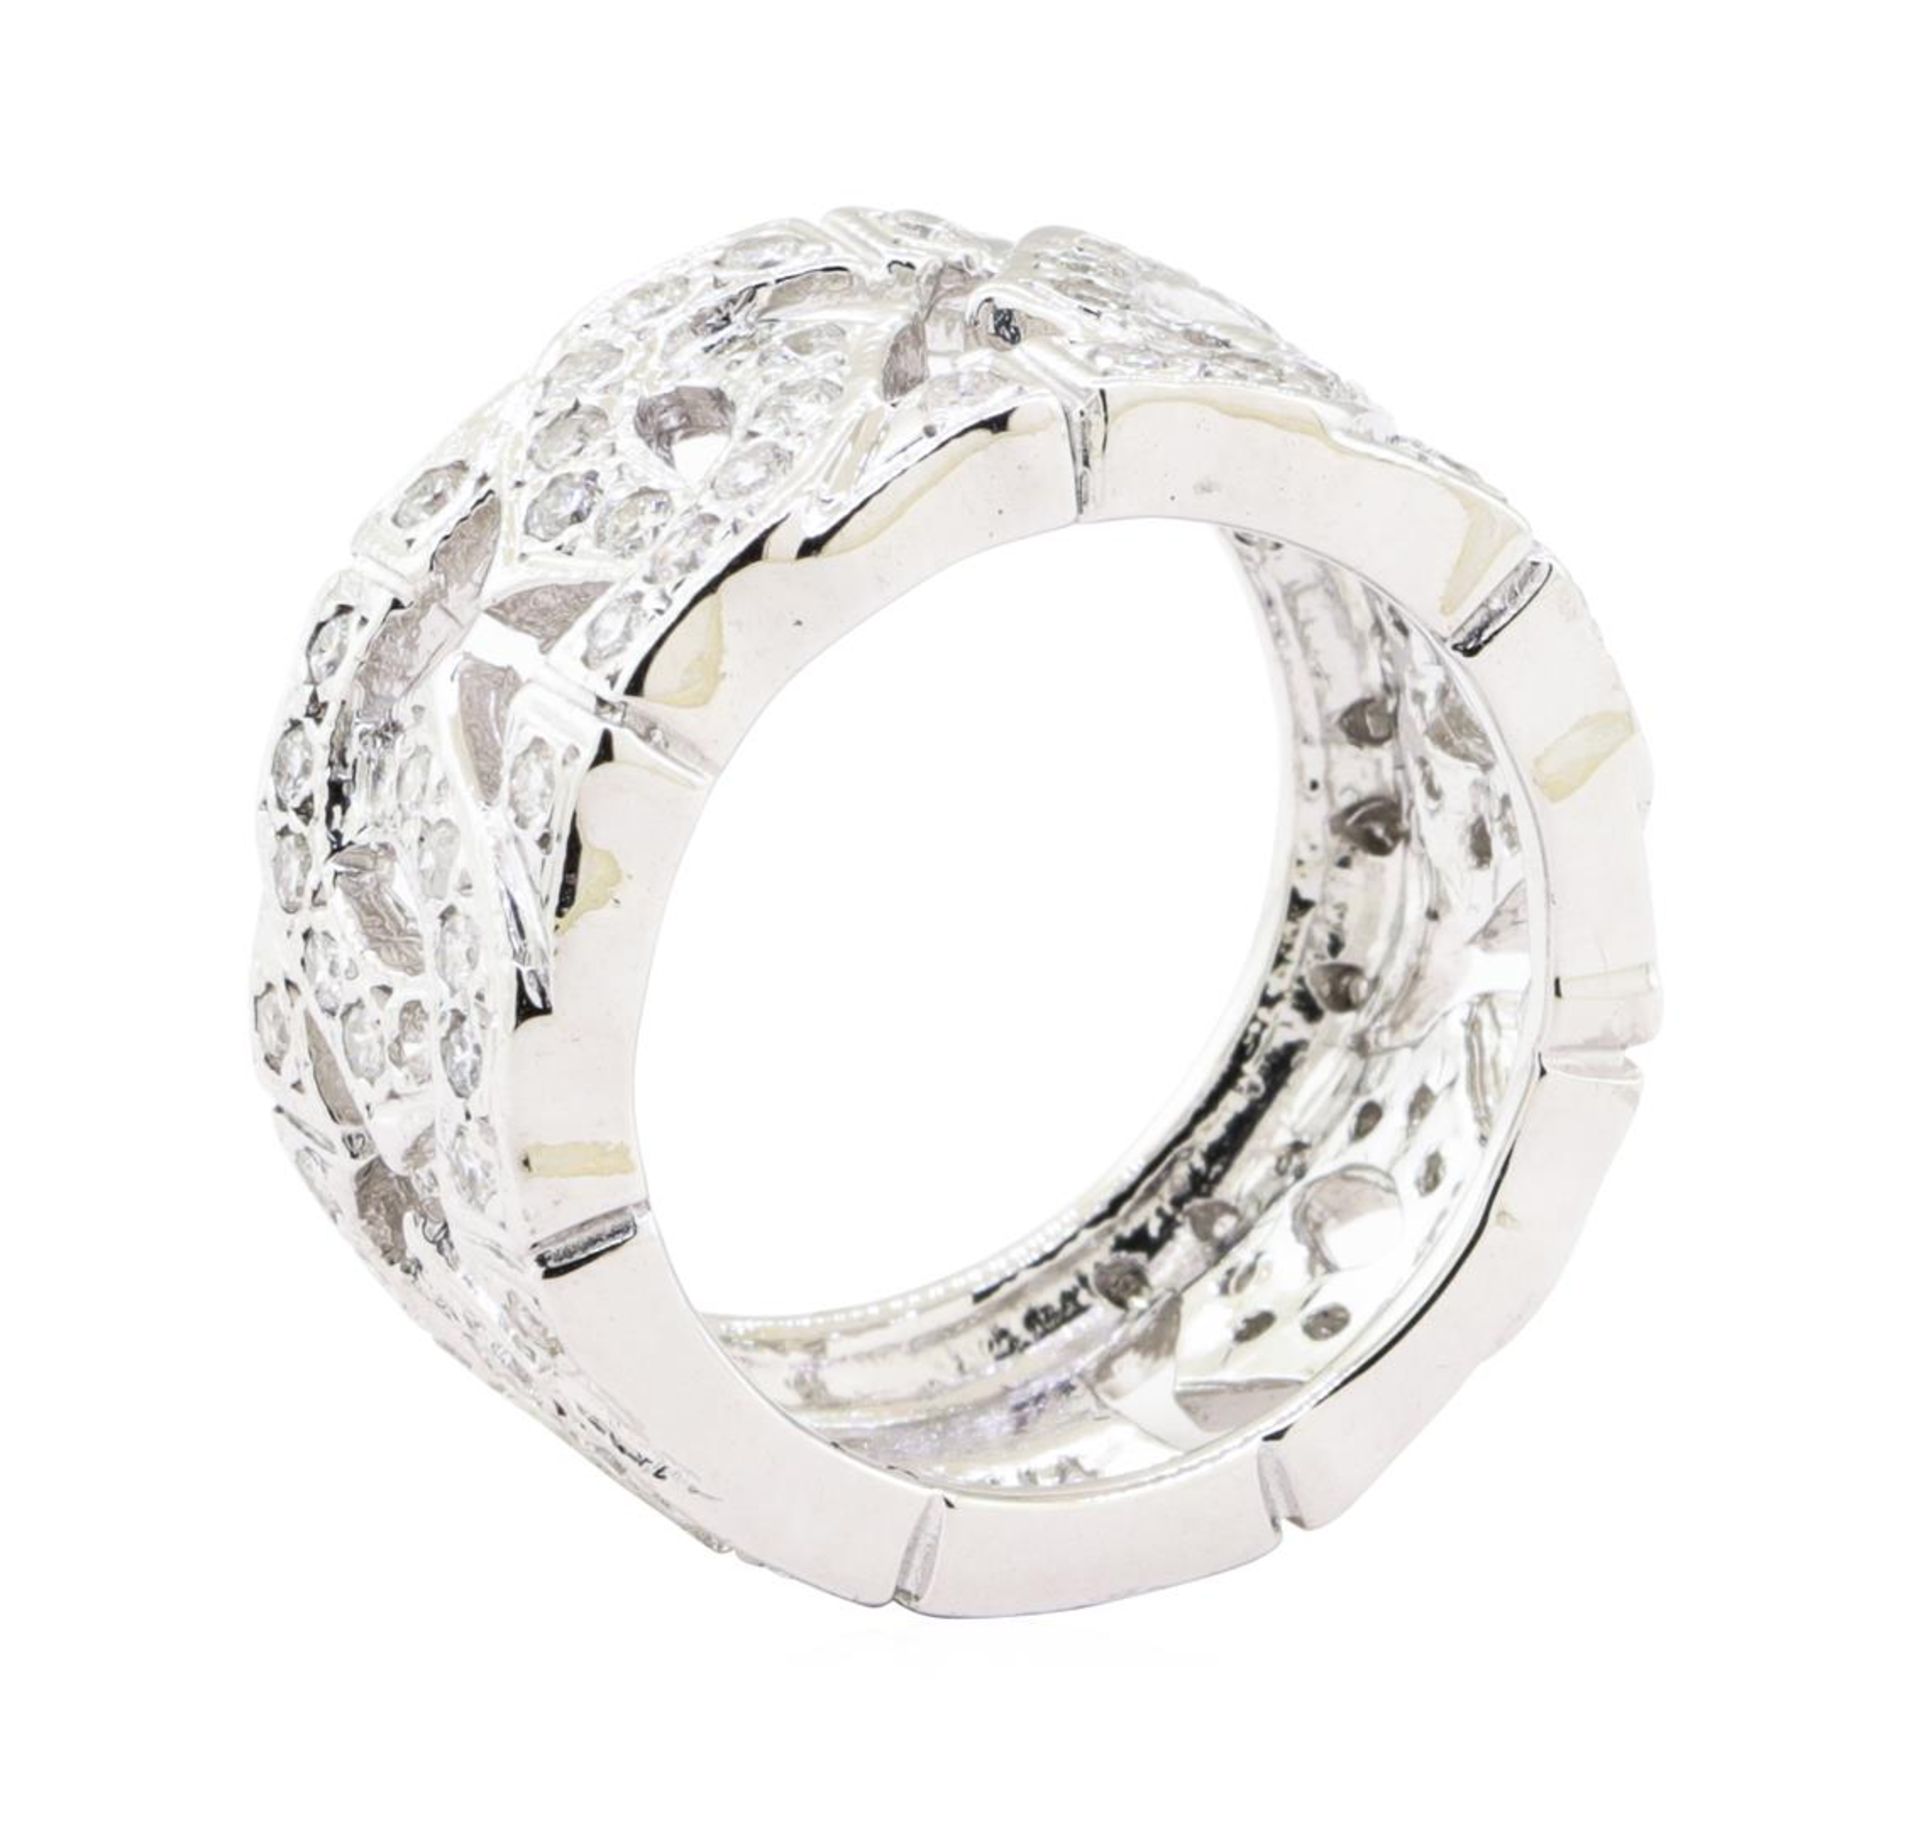 1.20 ctw Diamond Ring - 14KT White Gold - Image 4 of 5